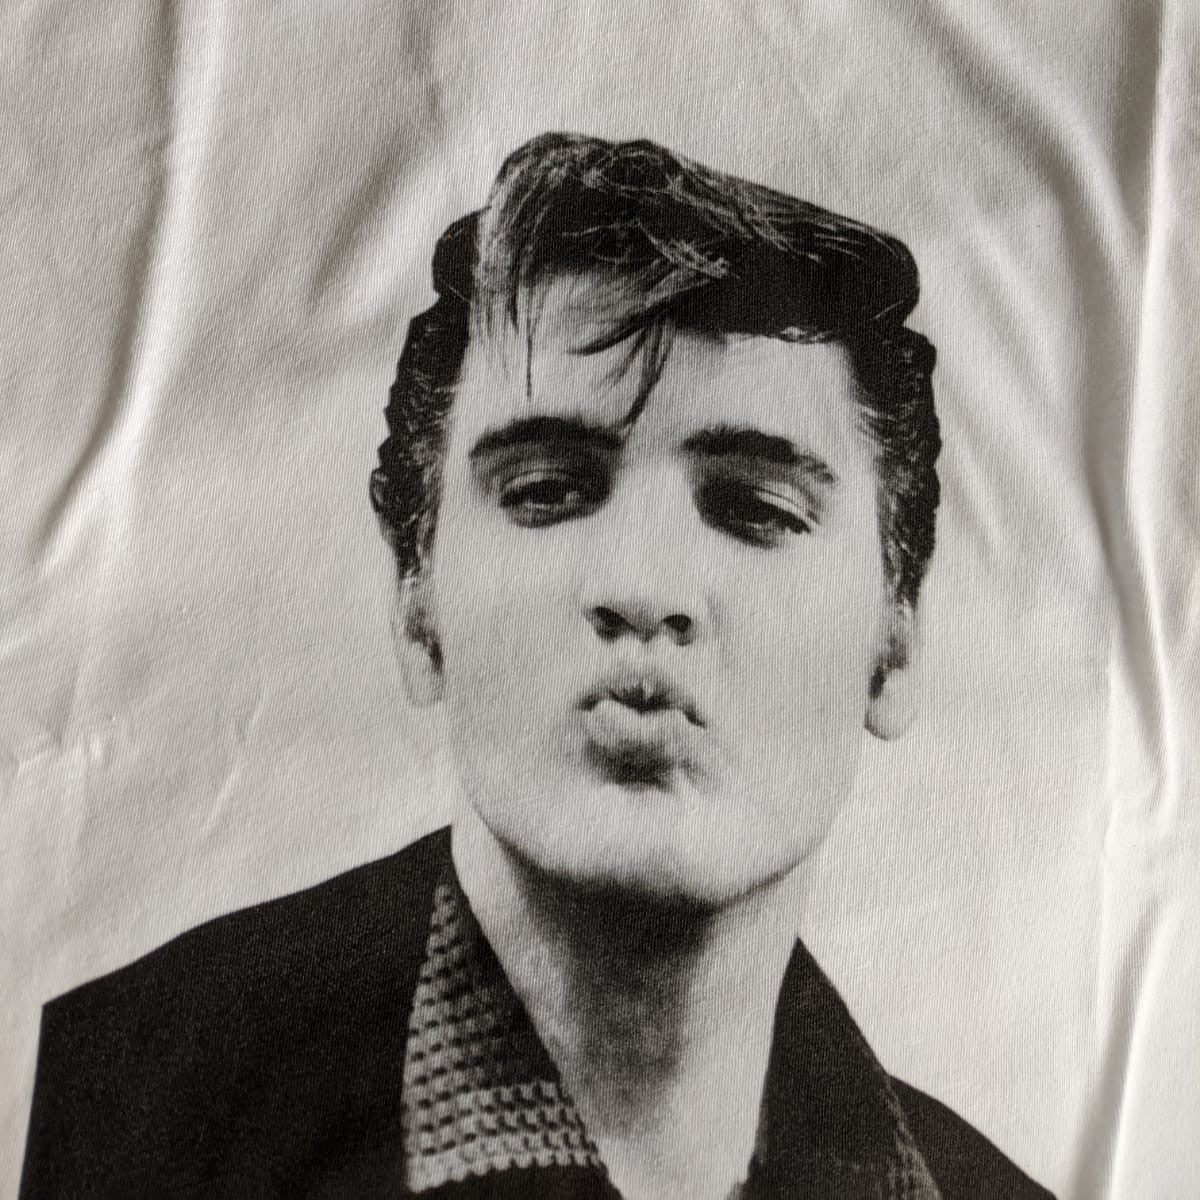 Elvis Pout  KiSS T-Shirt -Presley - The King - Rock N Roll - Jailhouse Rock